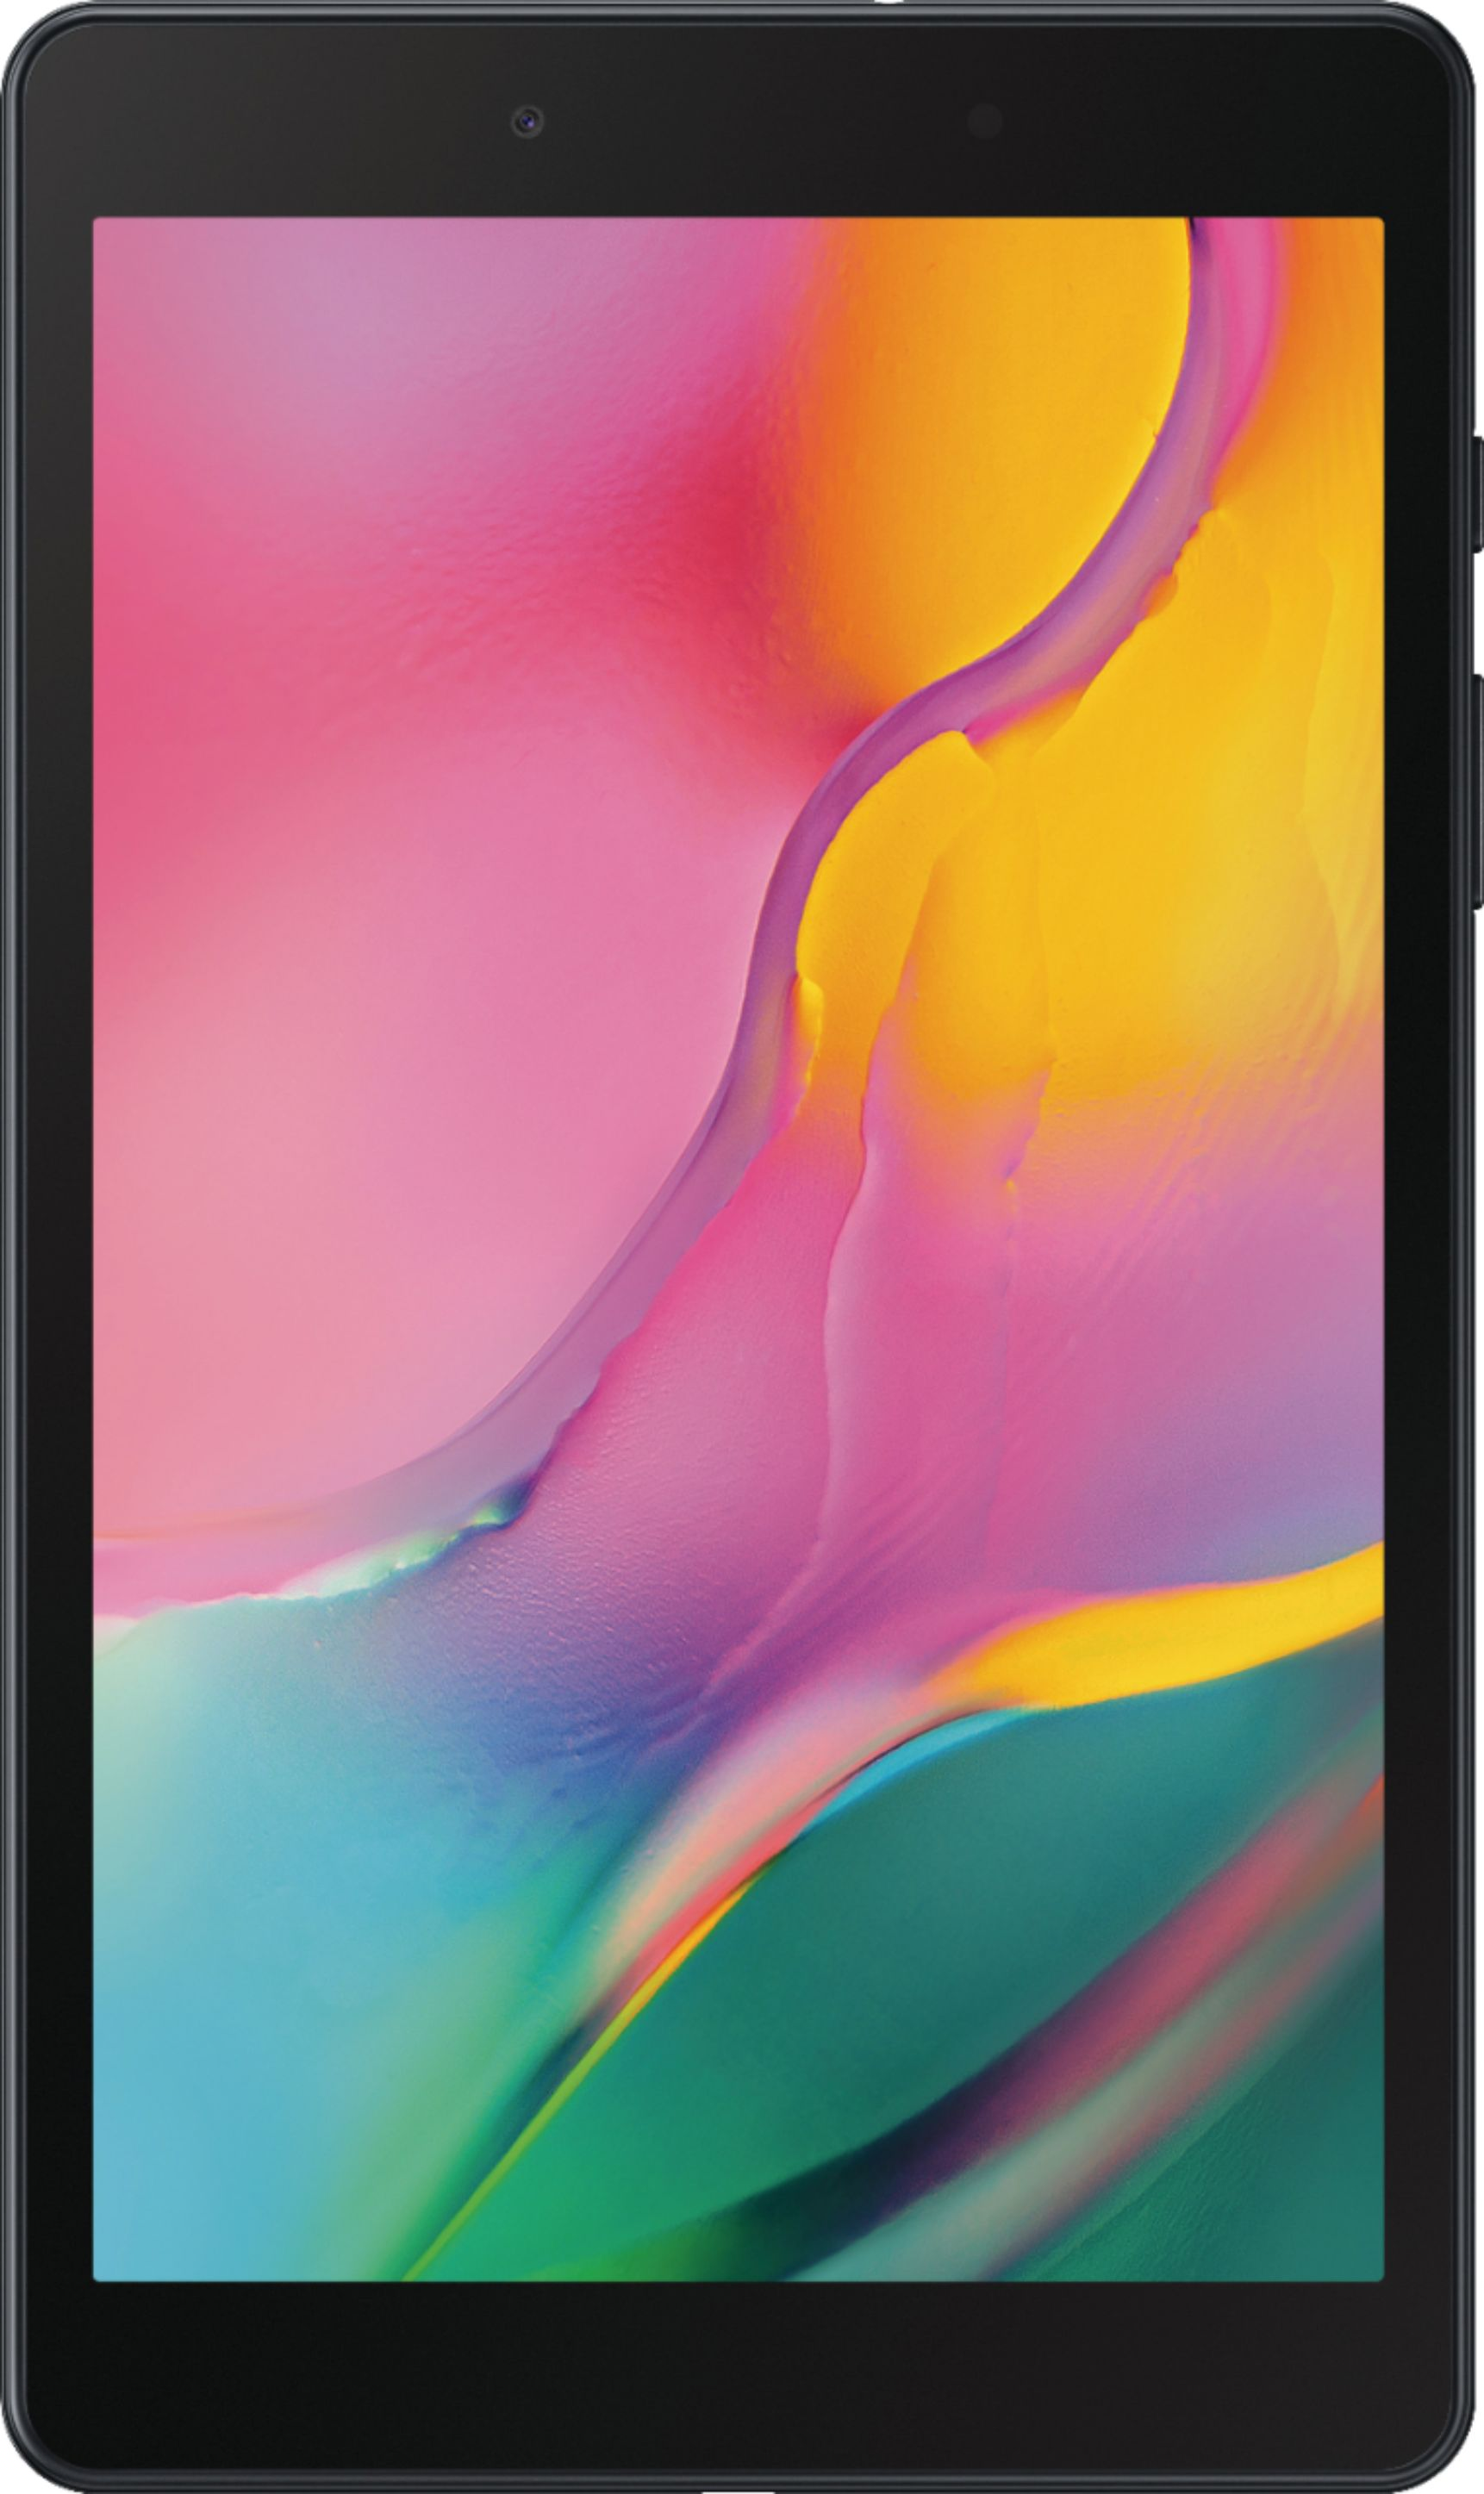 Samsung Galaxy Tab A (2019) 8" 32GB Black SM-T290NZKAXAR - Best Buy $100